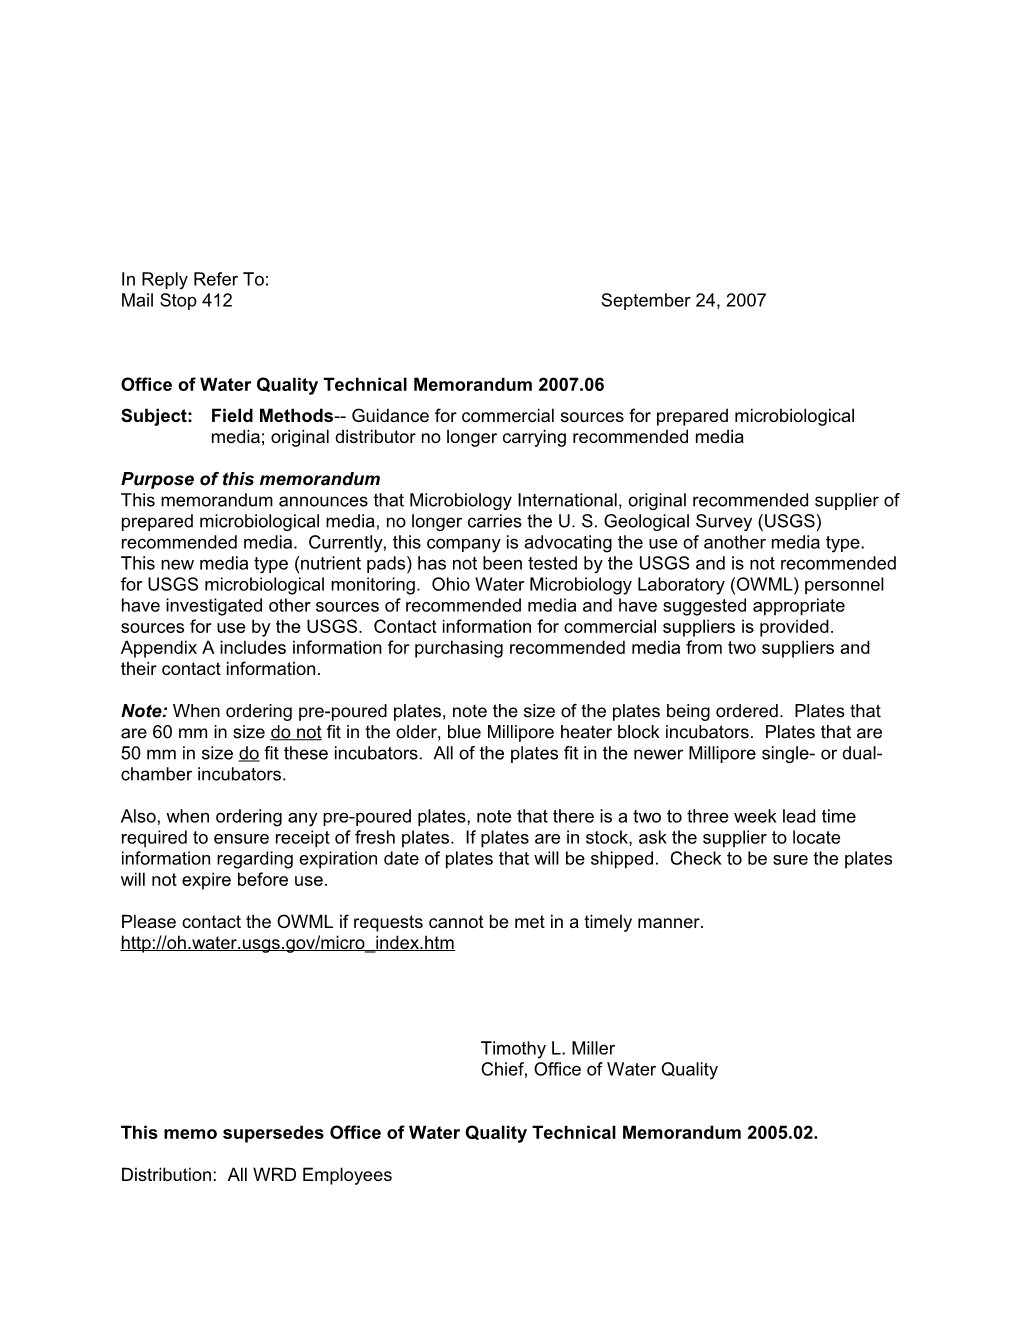 Office of Water Quality Technical Memorandum 2007.06